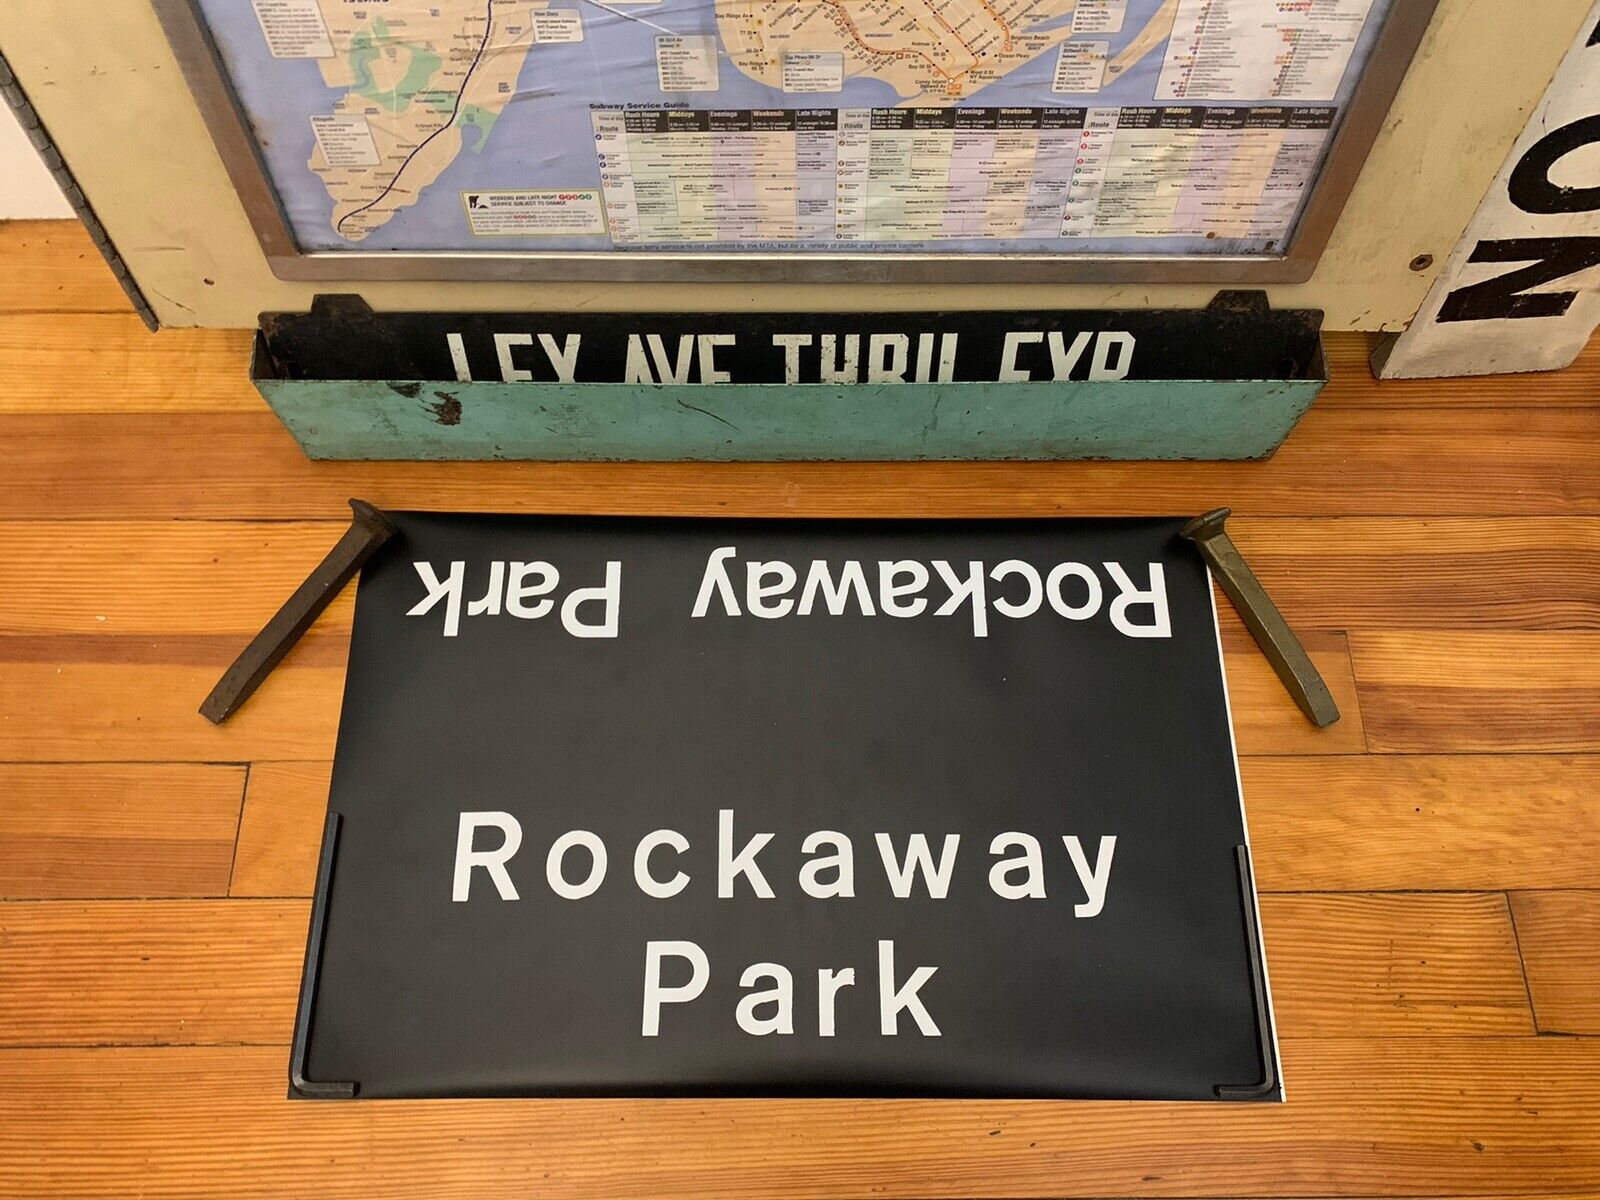 1969 NY NYC SUBWAY ROLL SIGN ROCKAWAY PARK BEACH OCEAN BOARDWALK TRANSIT QUEENS